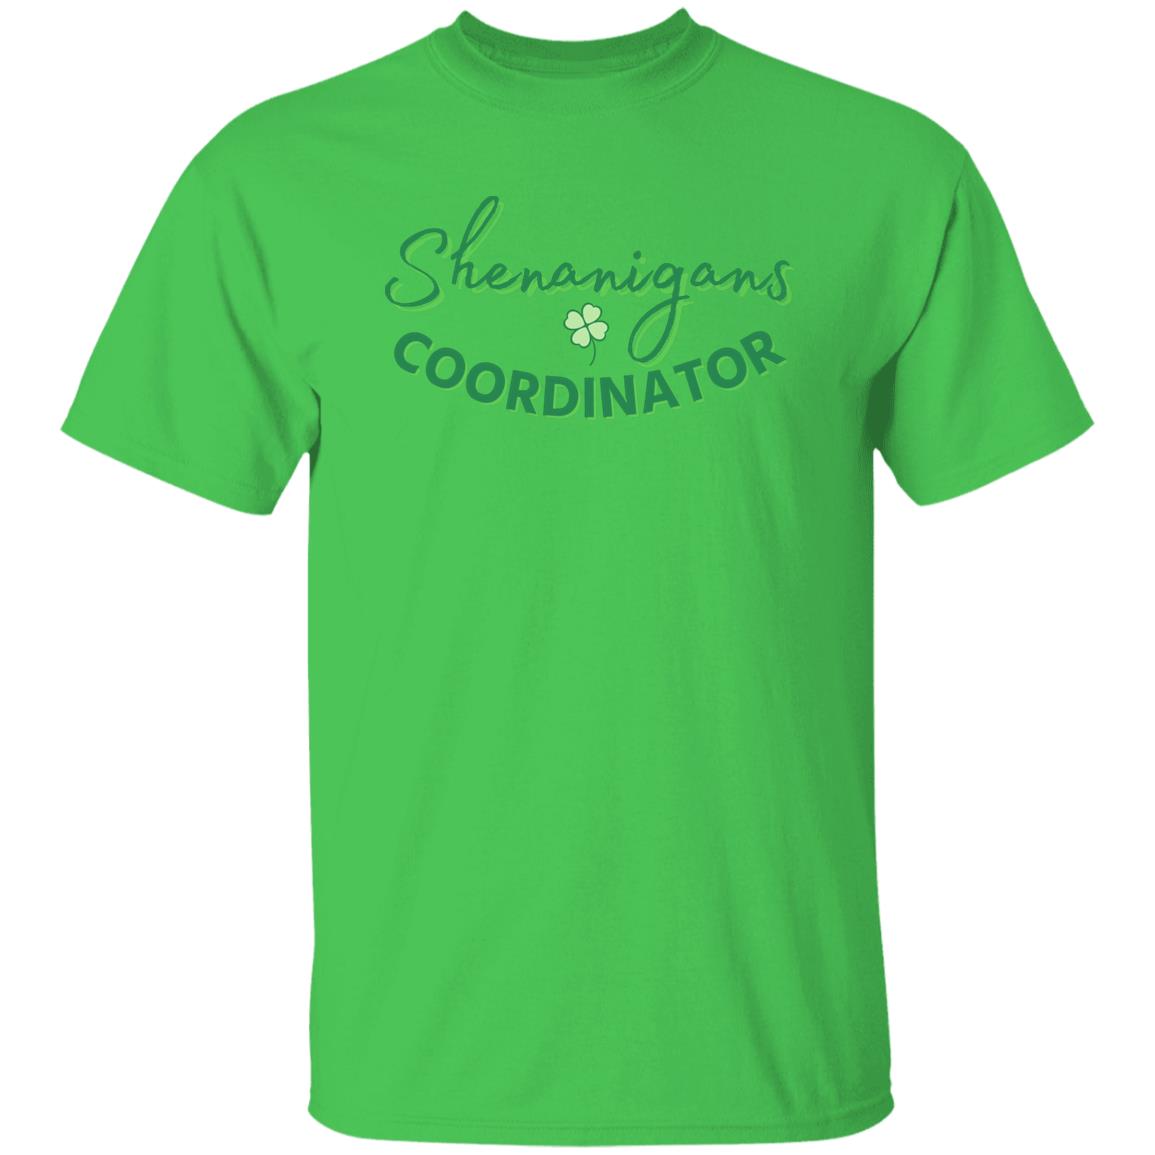 Shenanigans Coordinator T Shirt Shenanigans Coordinator T-Shirt - St. Patrick's Day T-Shirt